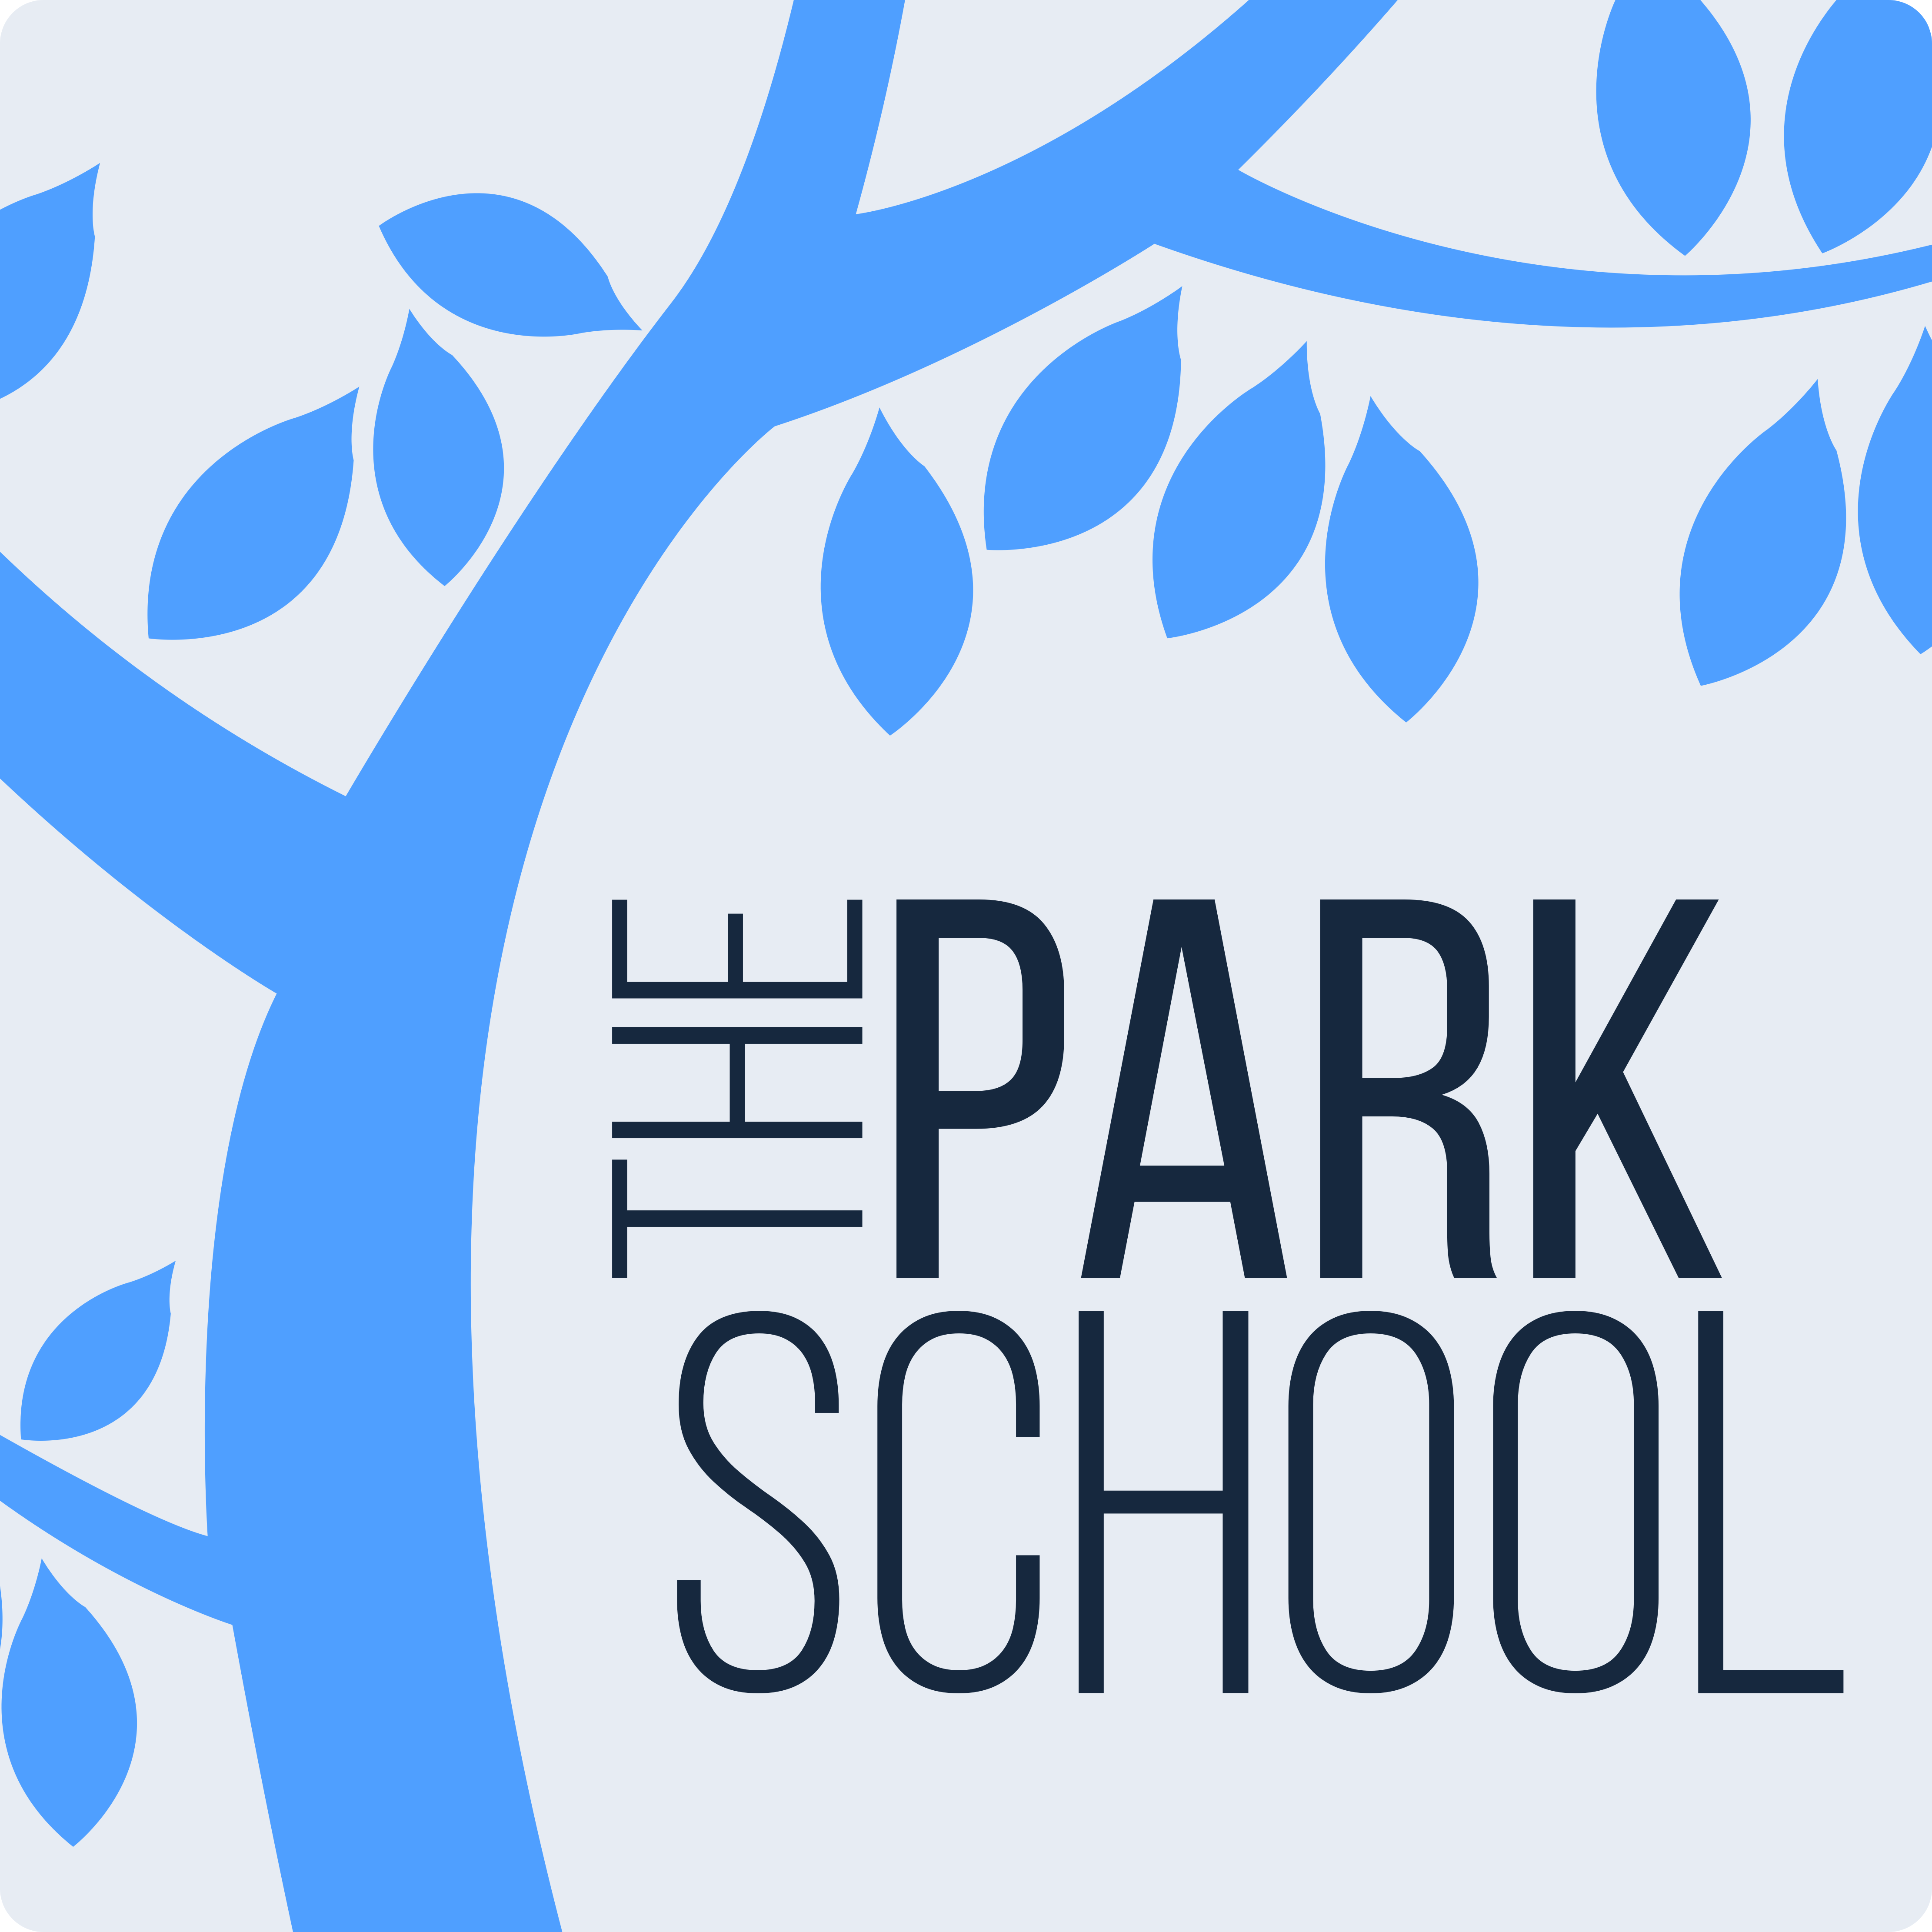 The Park School